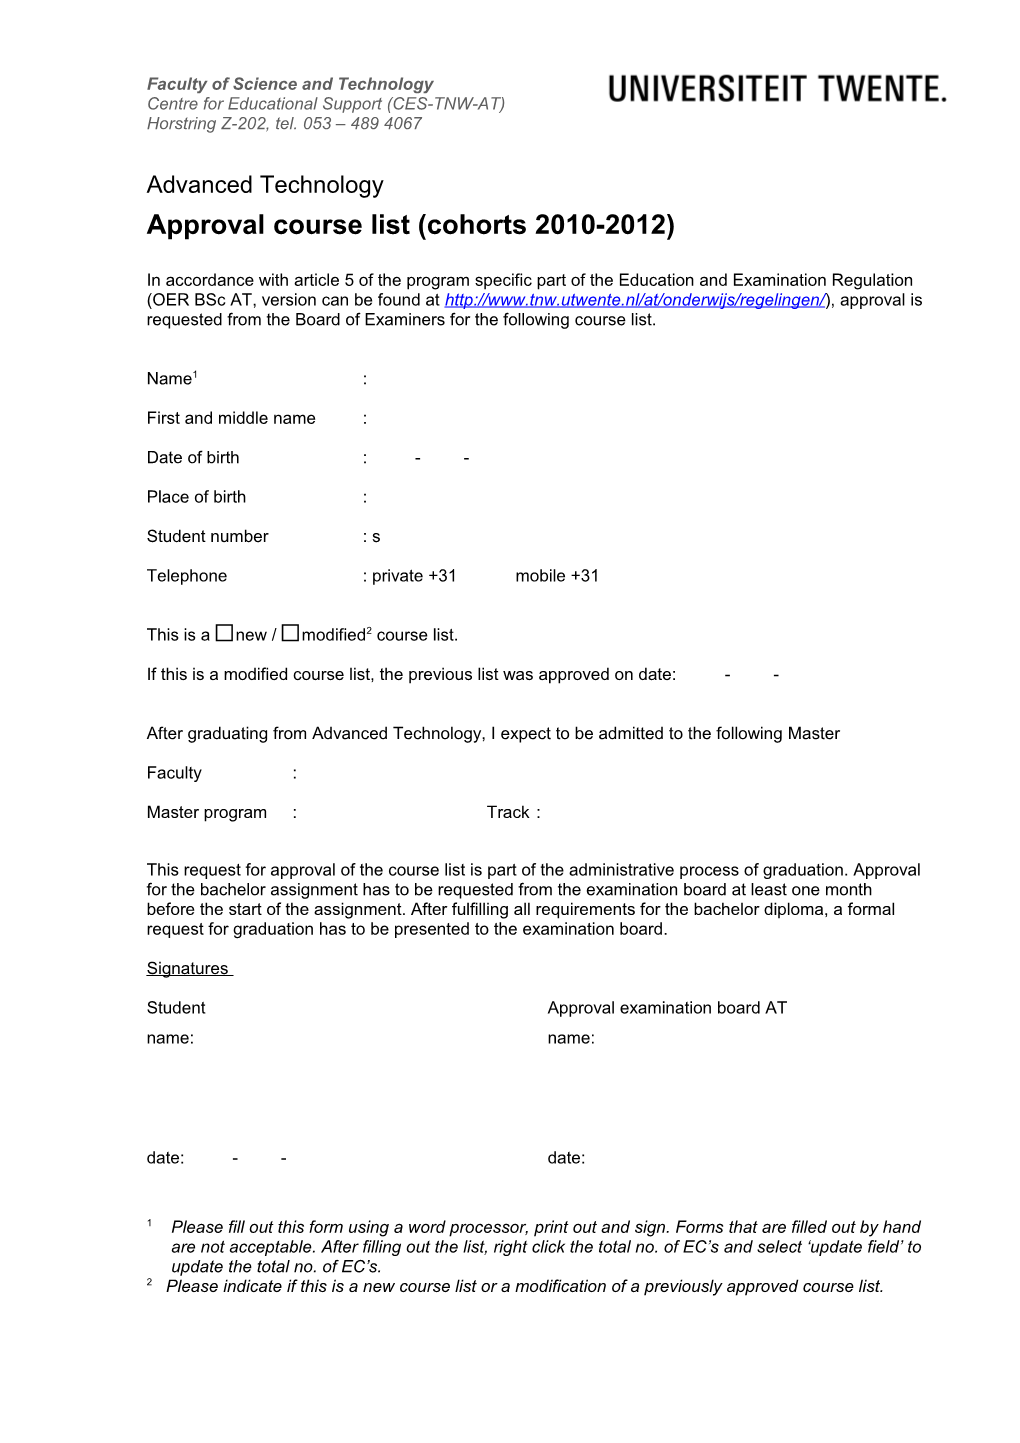 Approval Course List (Cohorts 2010-2012)